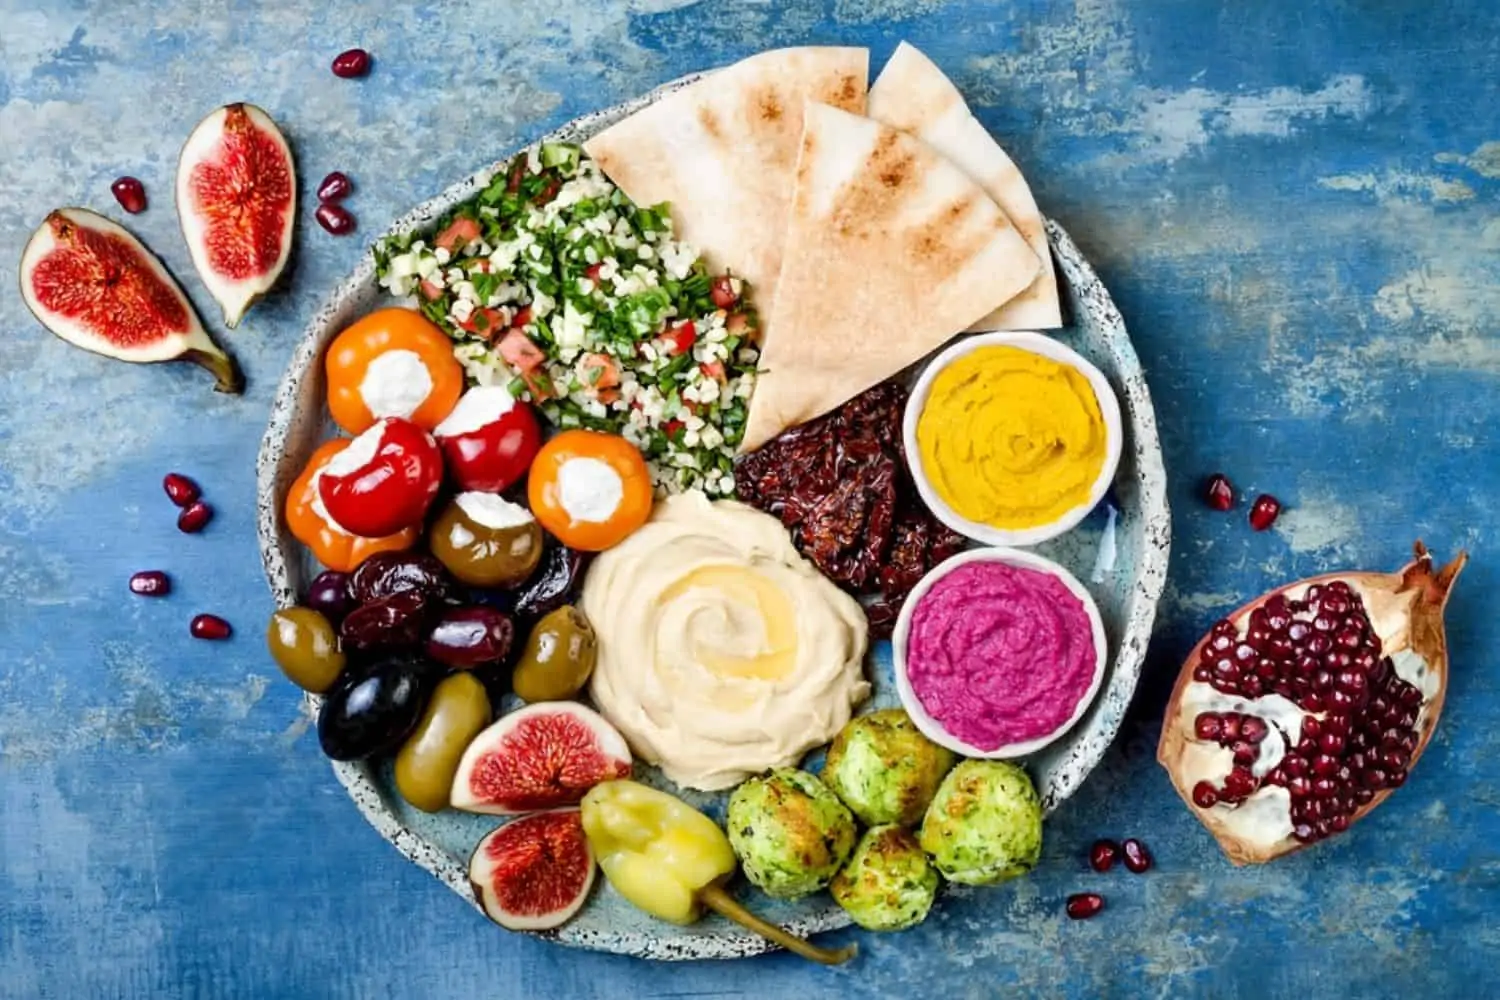 Food buzz: Why is the Mediterranean diet so popular?